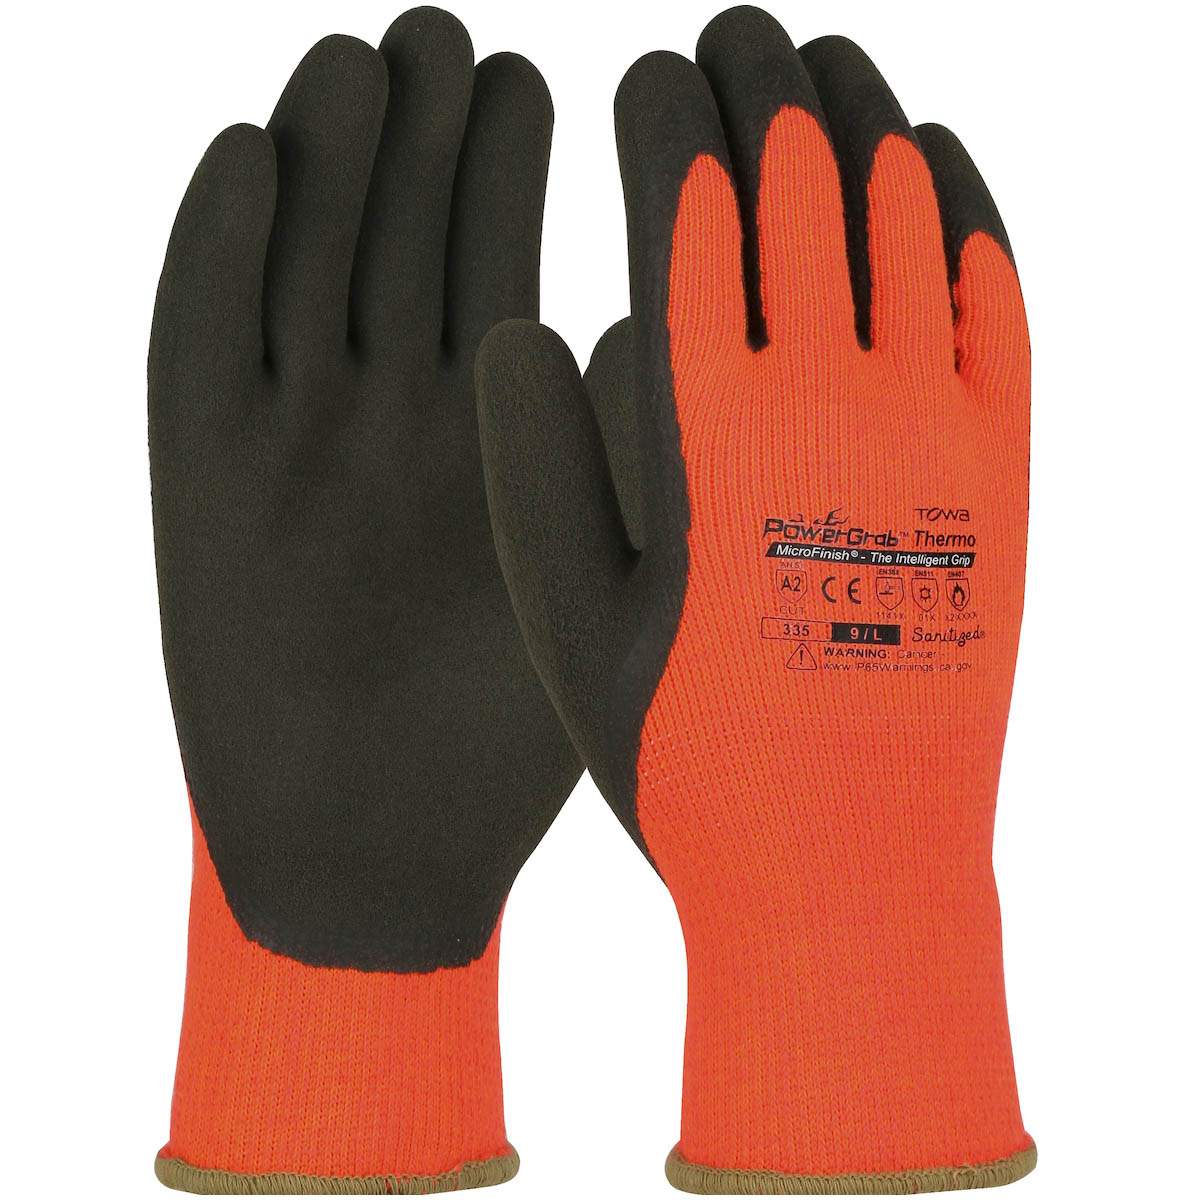 PIP 80-8800 Work Gloves 80-8800, M, Size Medium, Leather, Gray, White